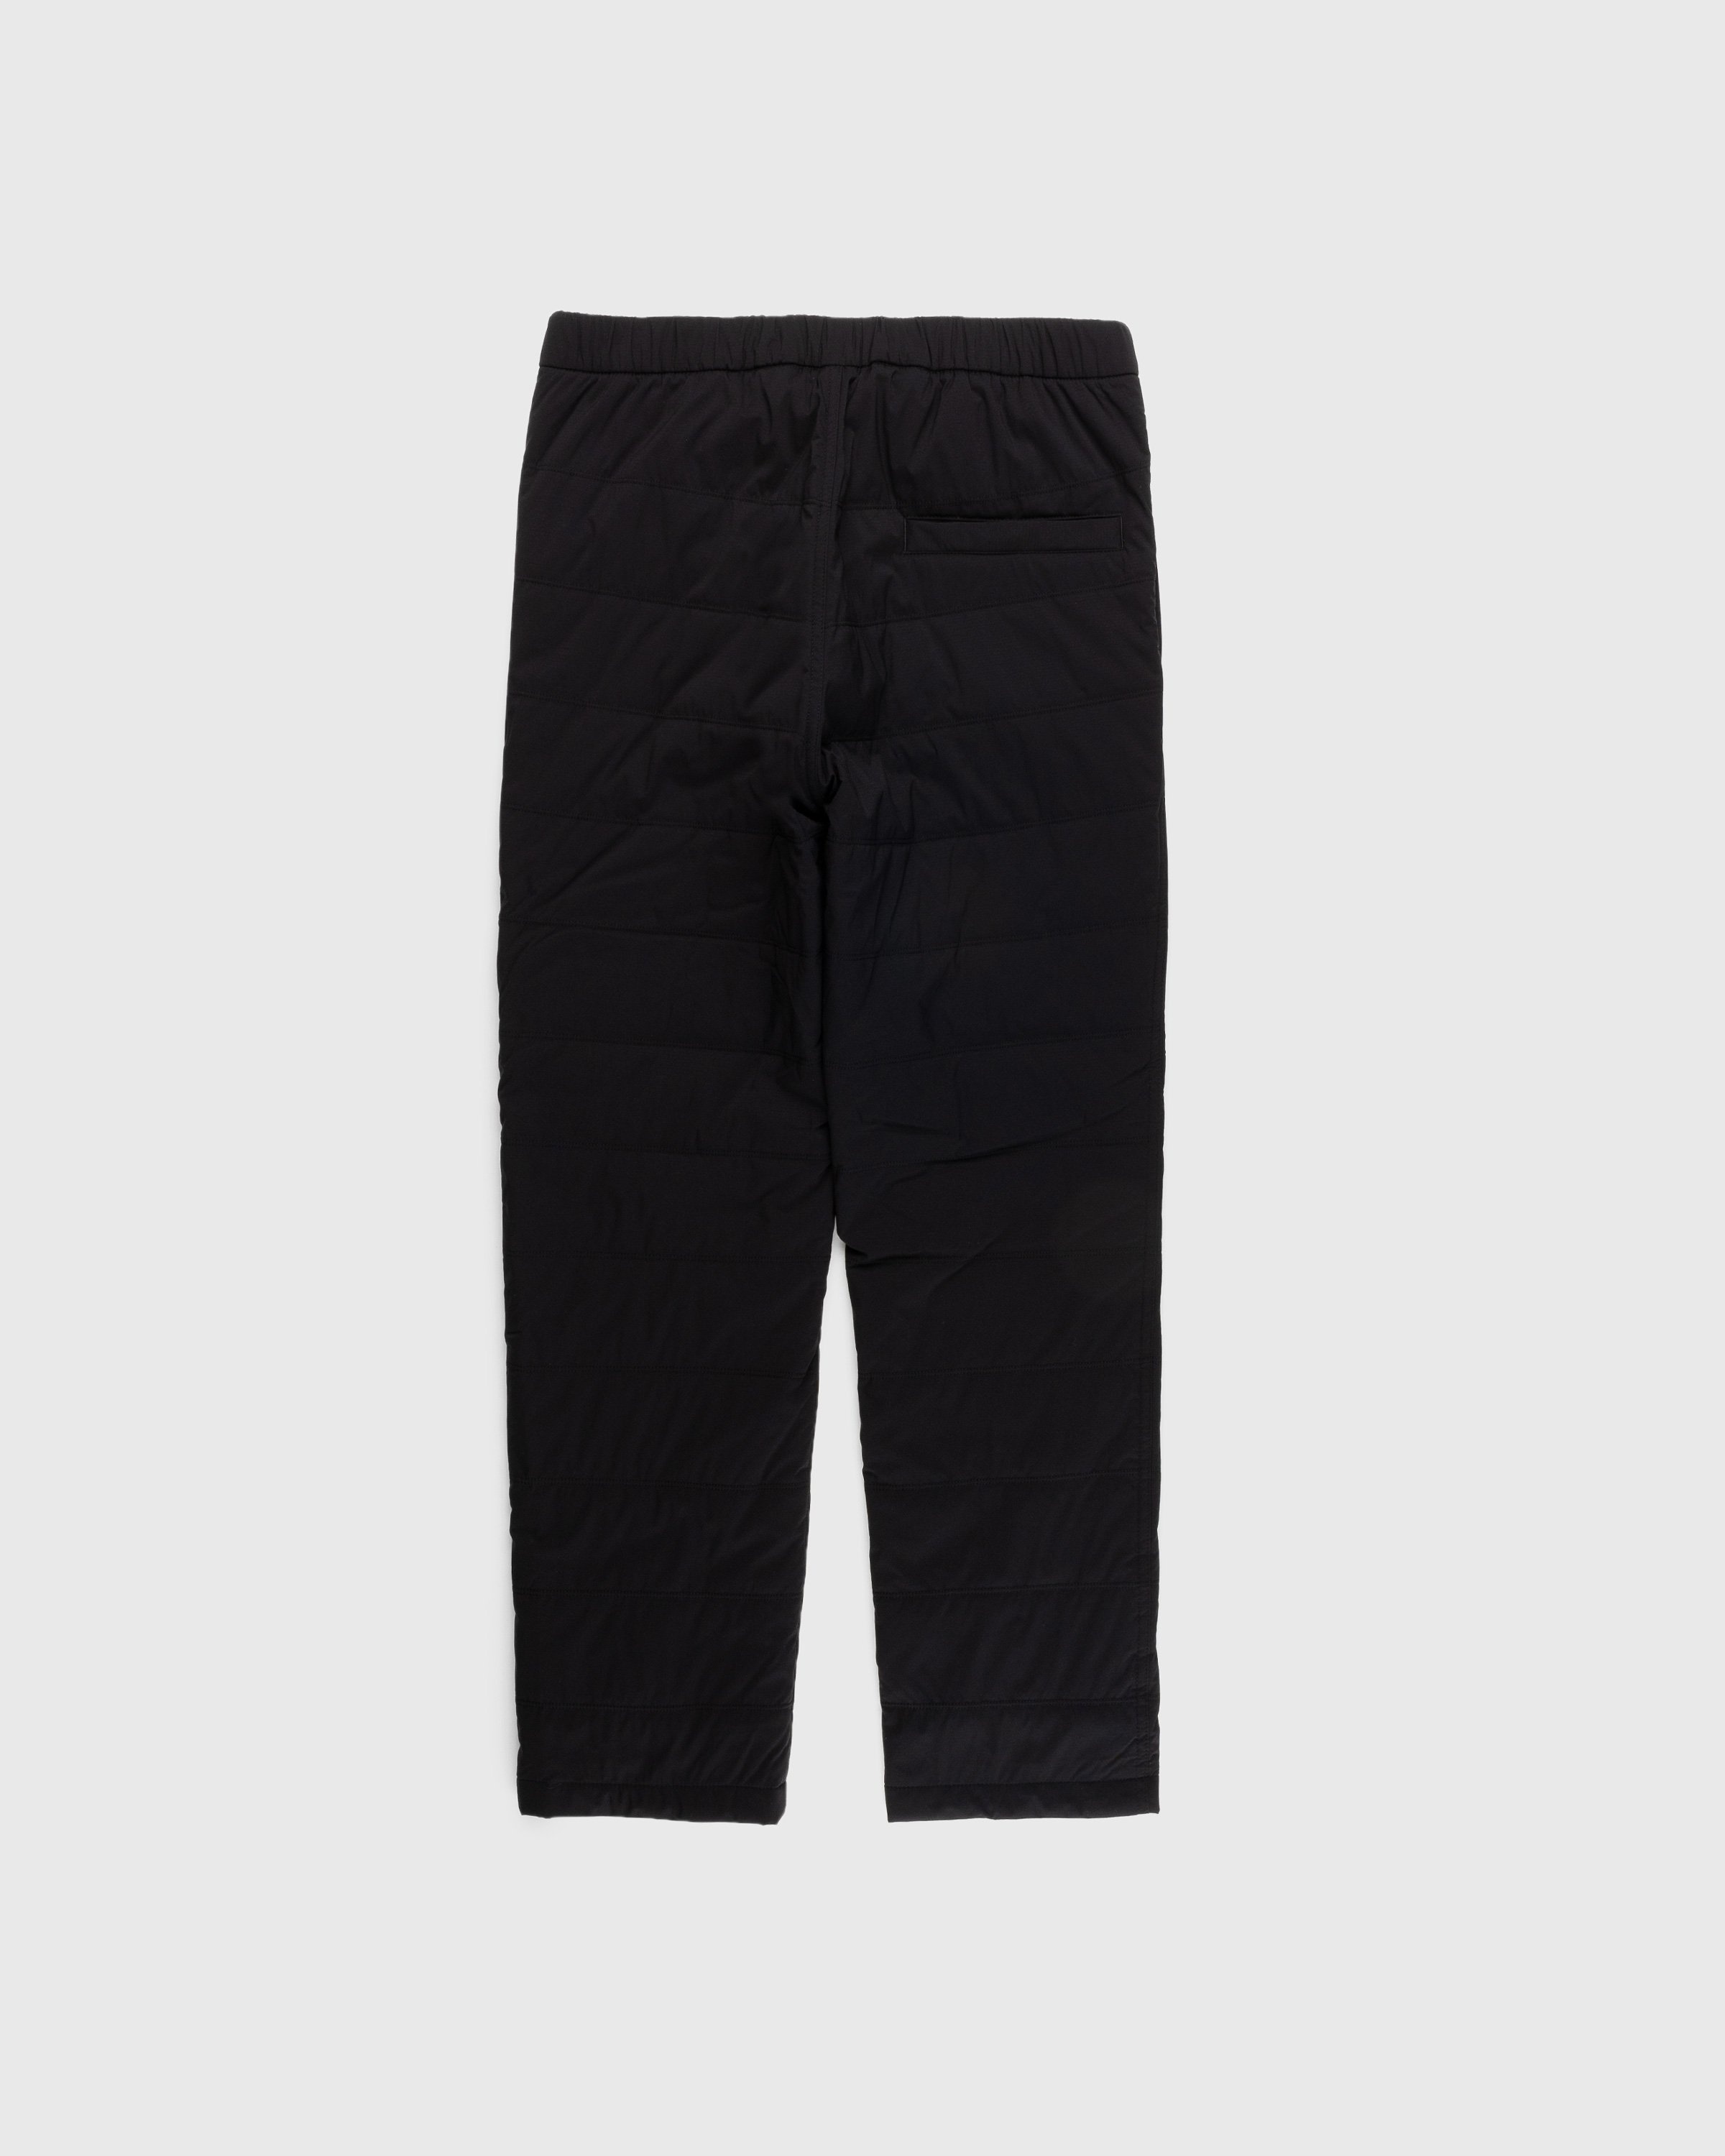 Snow Peak – Flexible Insulated Pants Black - Active Pants - Black - Image 2